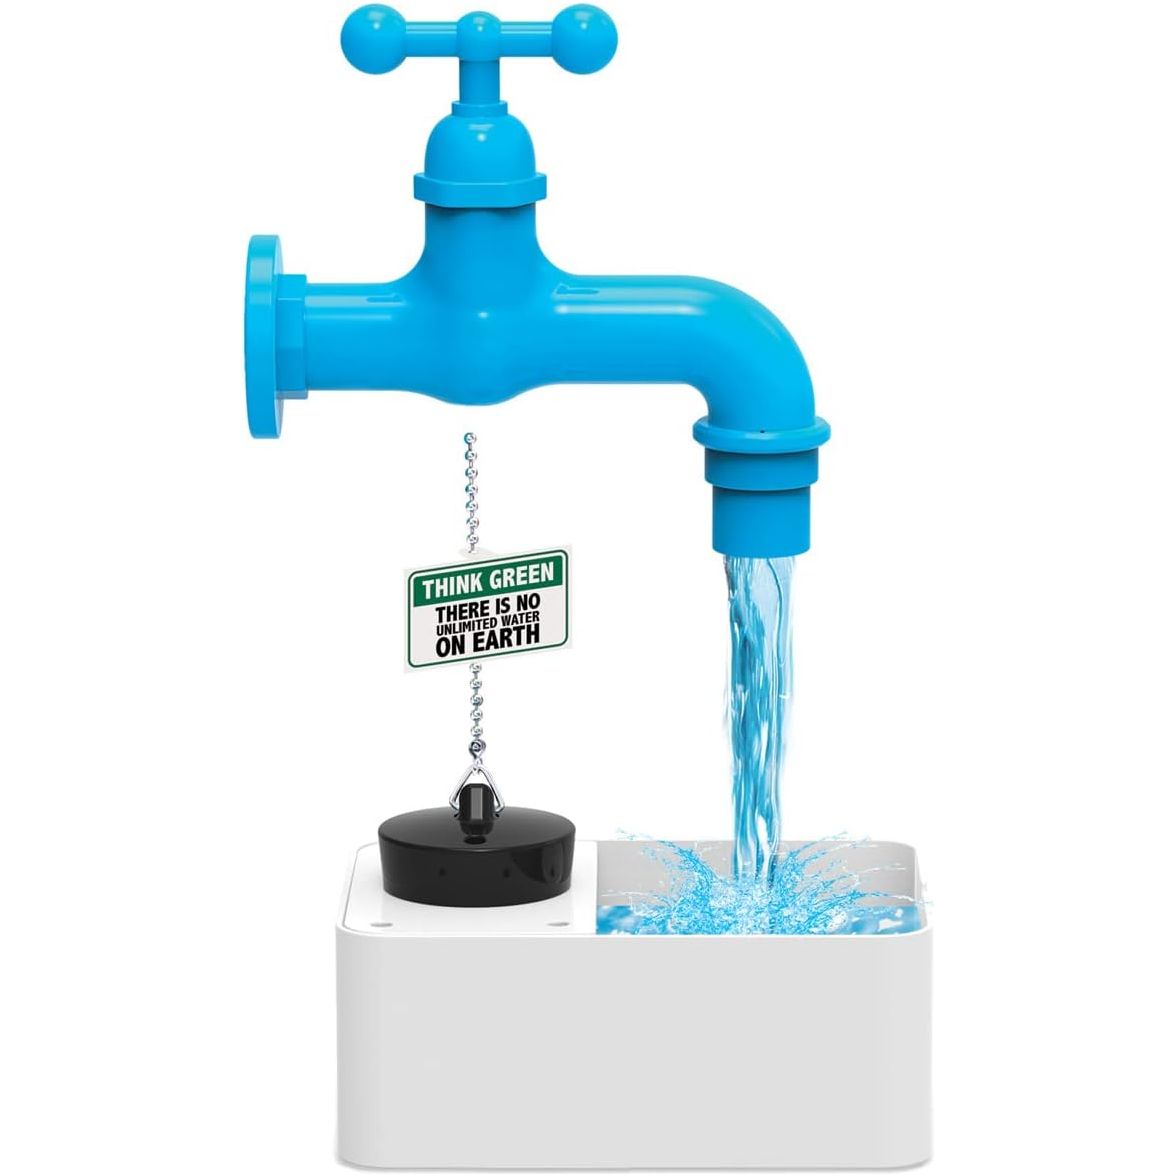 4M Green Science - Magic water tap